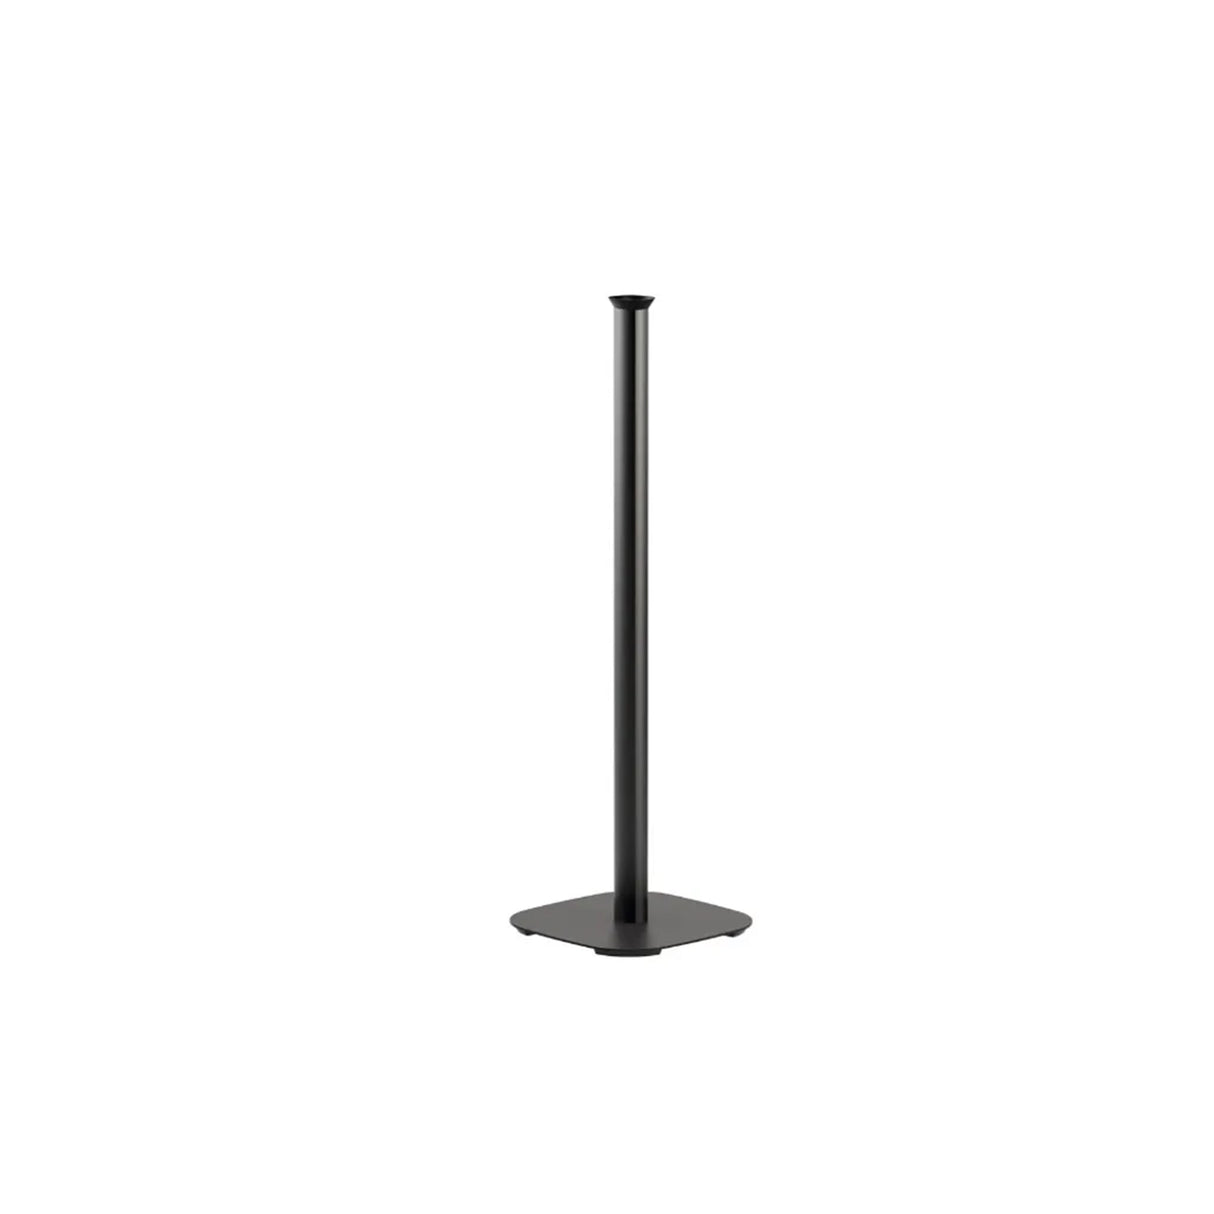 Bowers & Wilkins Flex Floor Stands - Stands for Flex Speakers (Each)